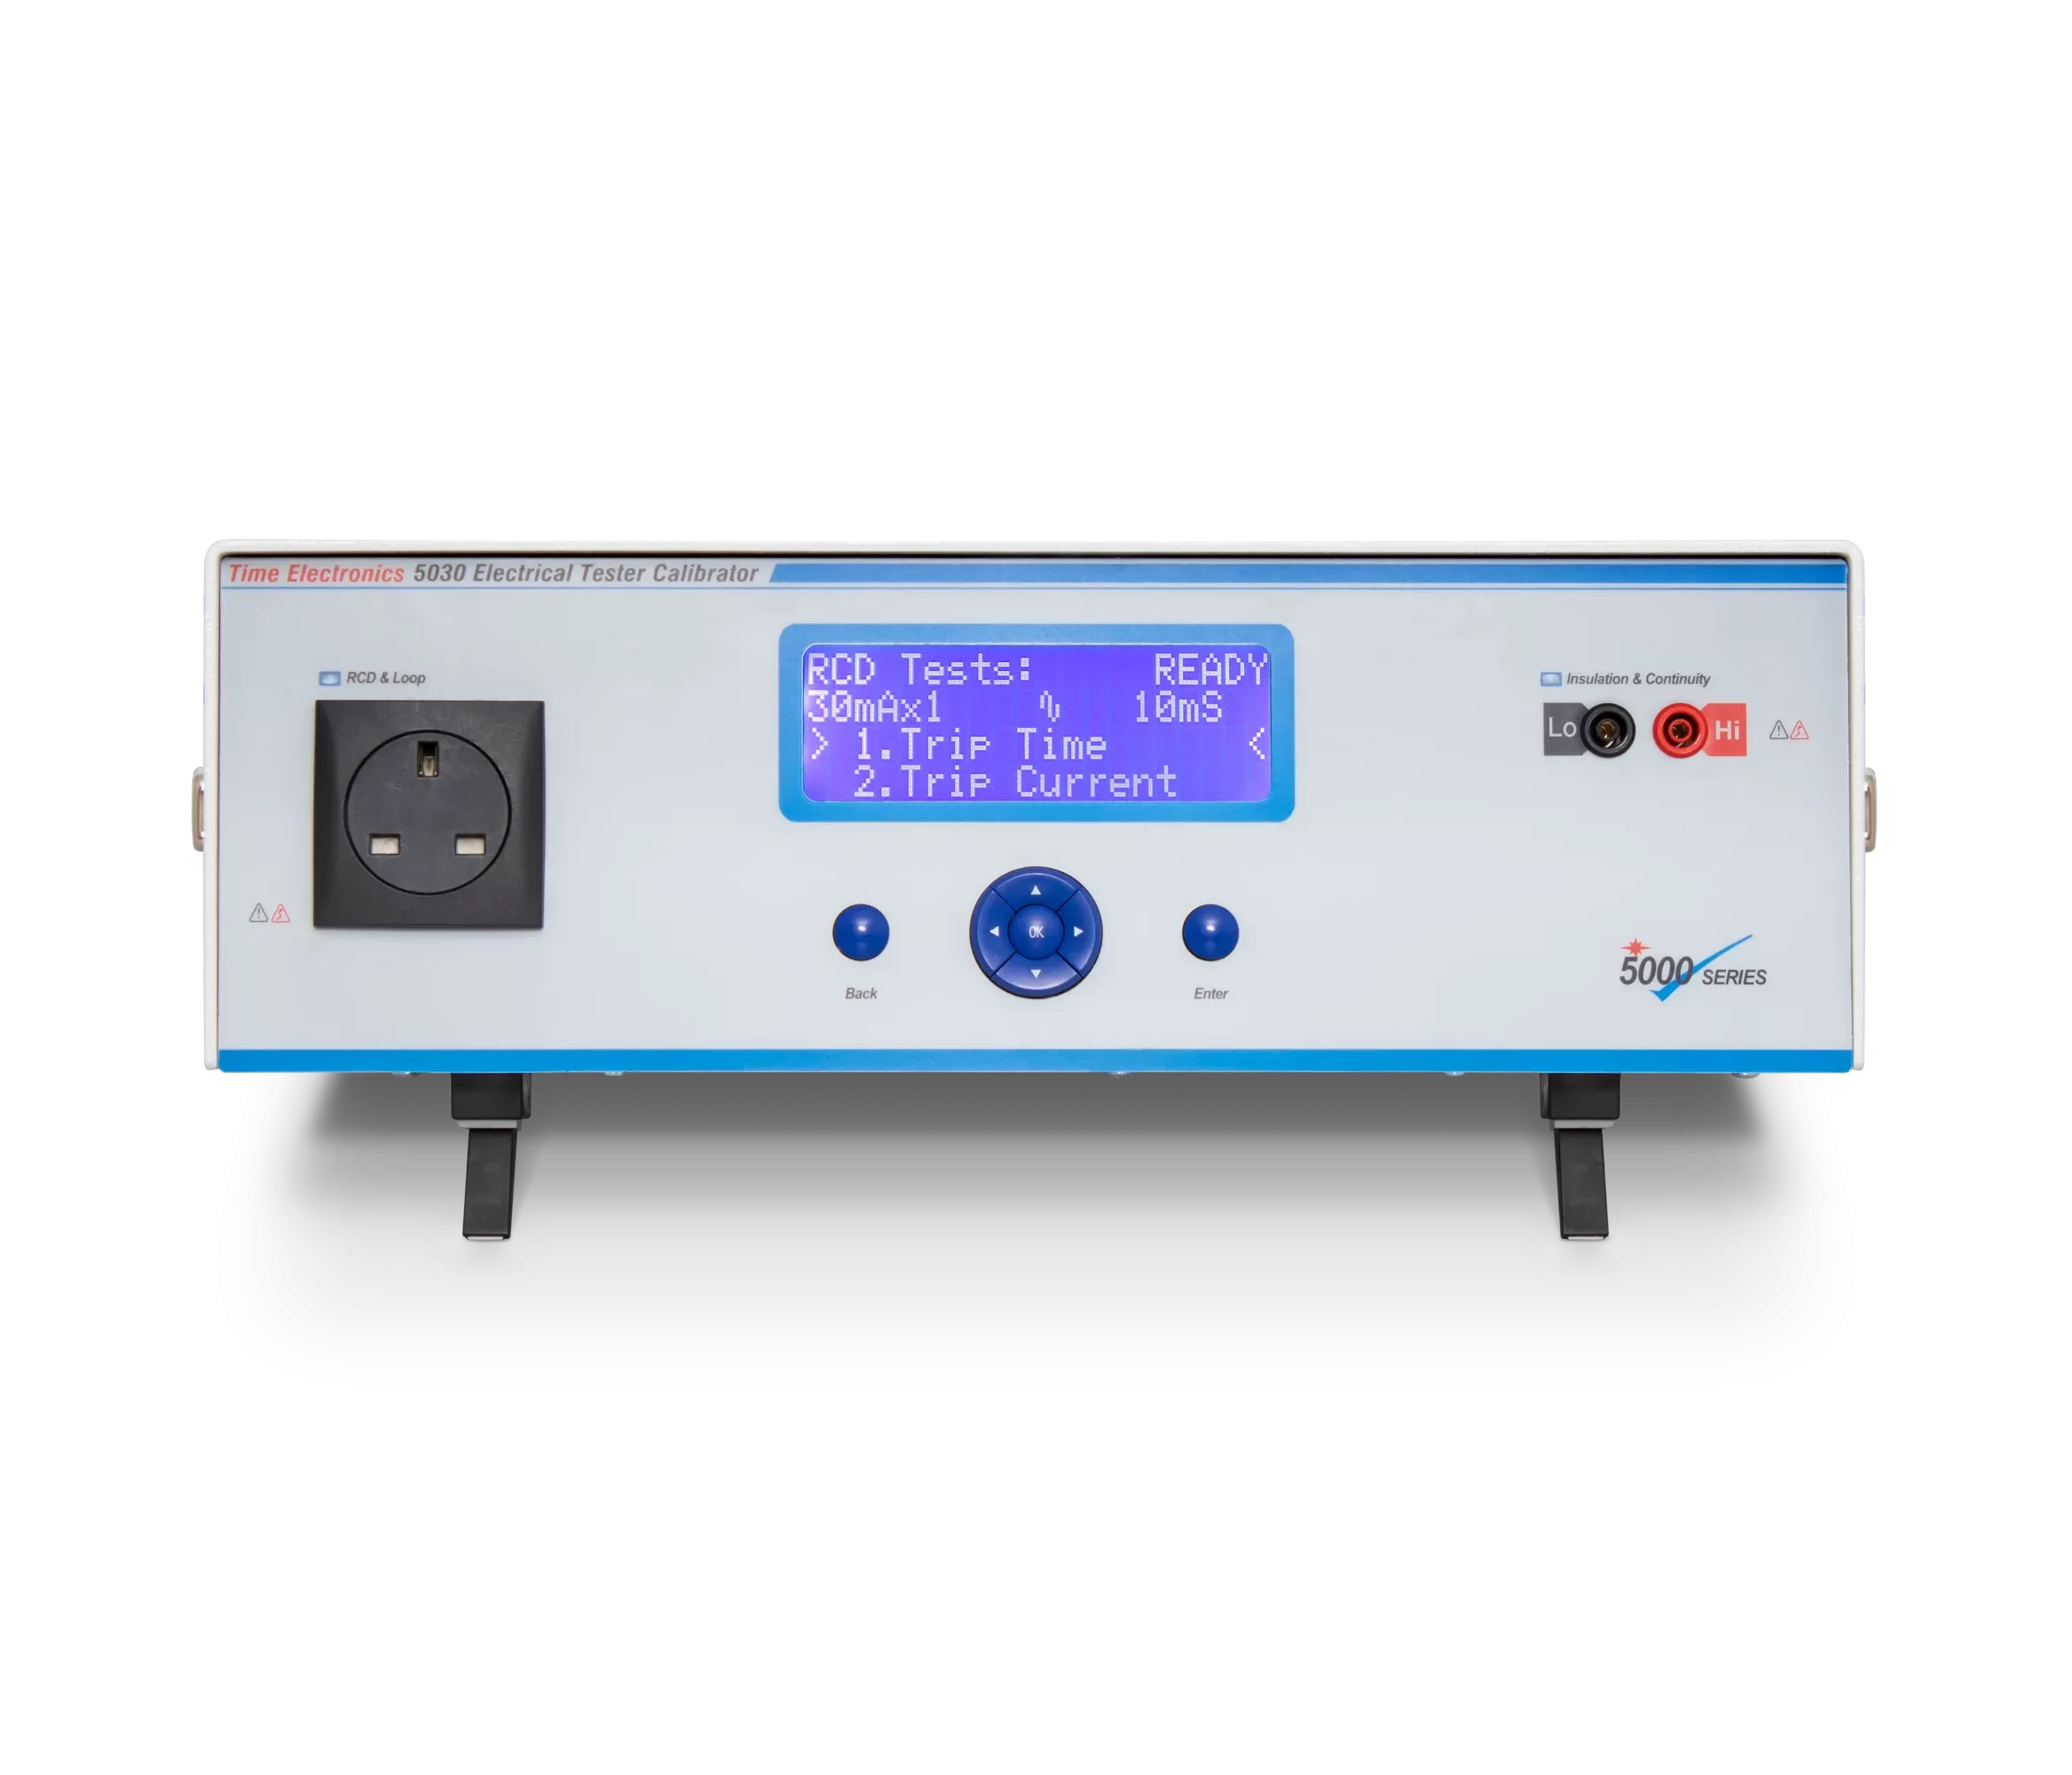 5030 Electrical Tester Calibrator